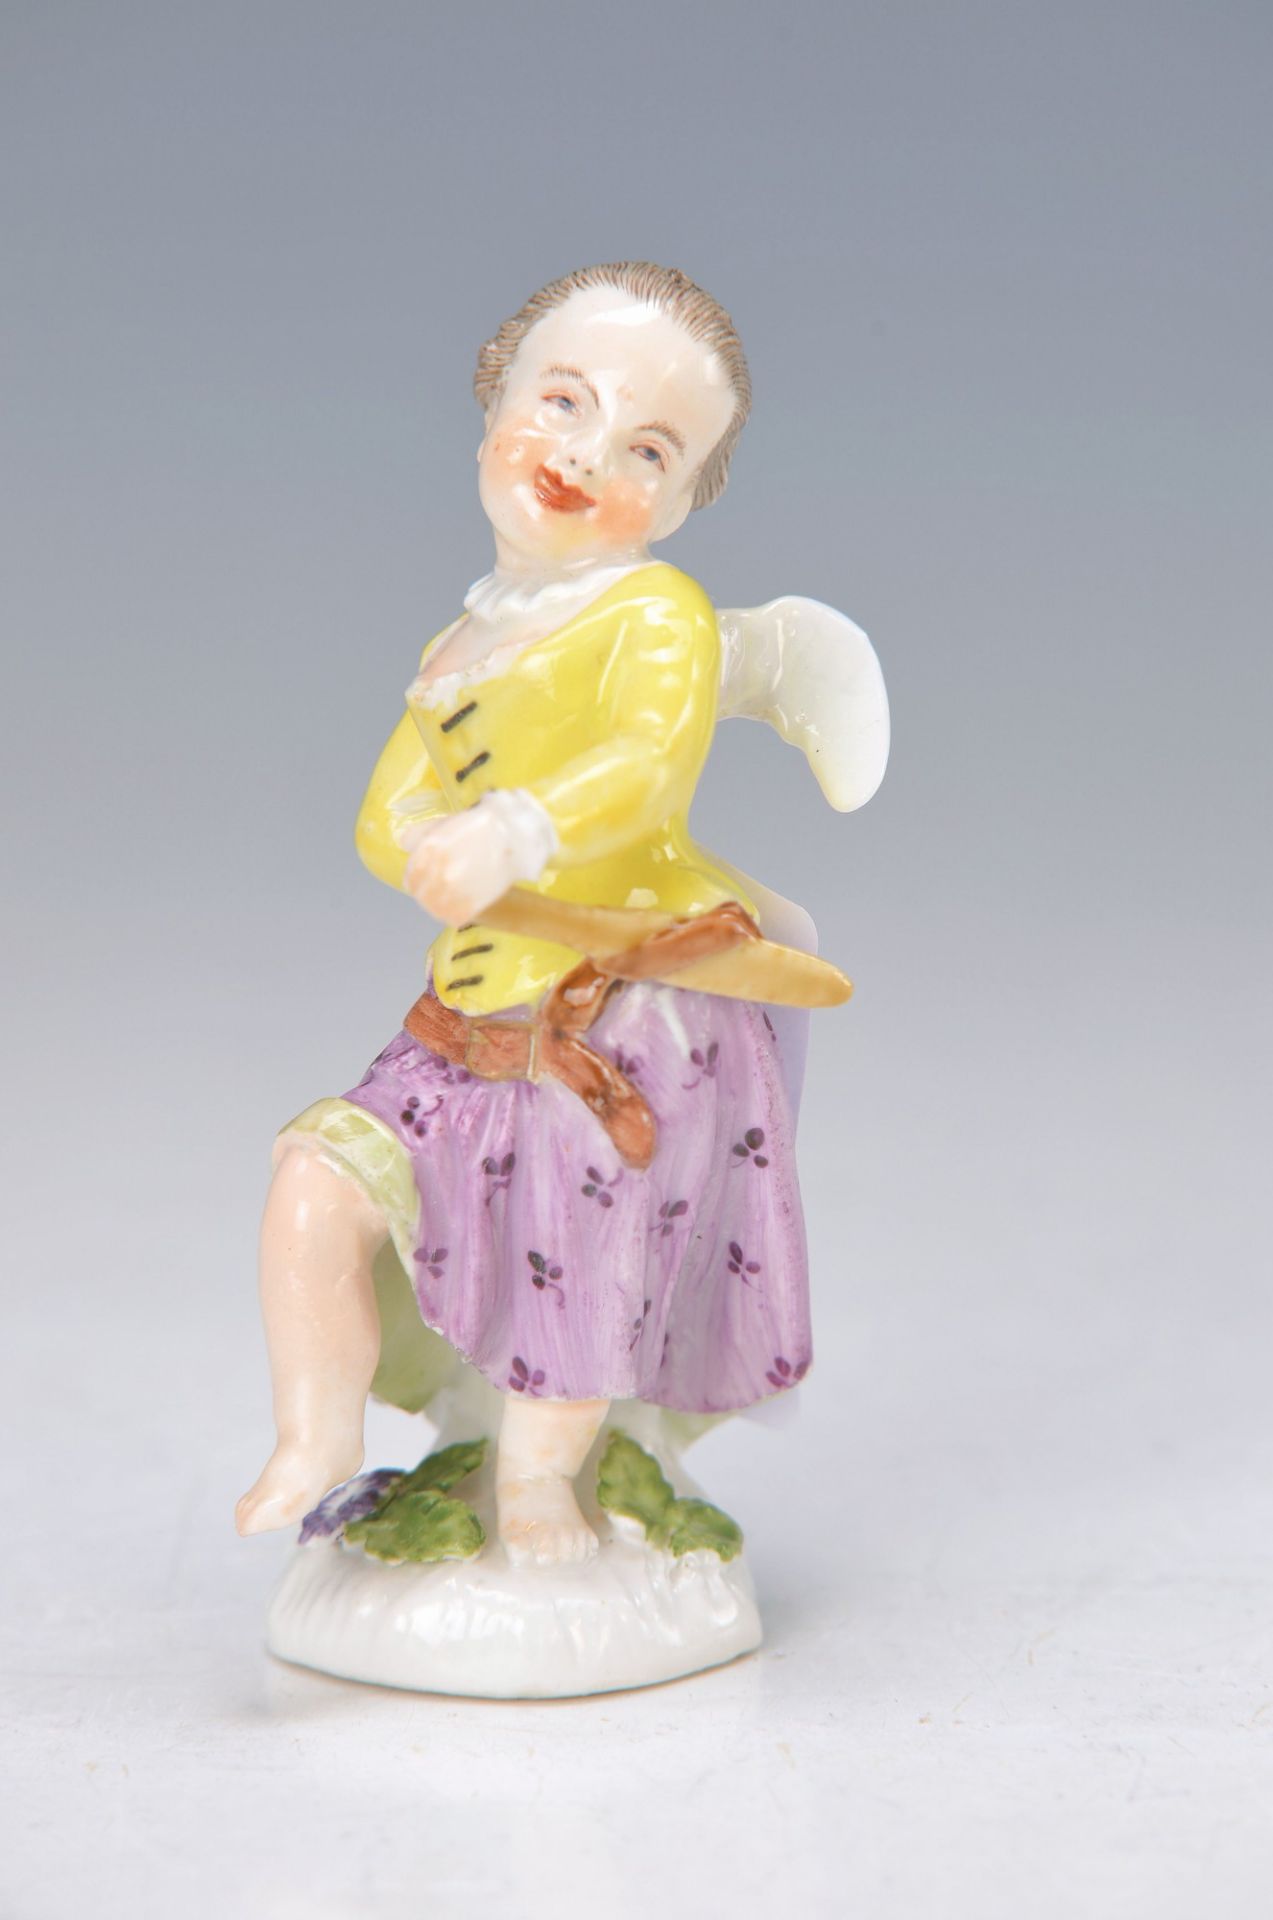 figurine, Meissen, around 1755-60, designed by J.J. Kaendler, disguised cupid as Columbine, fine